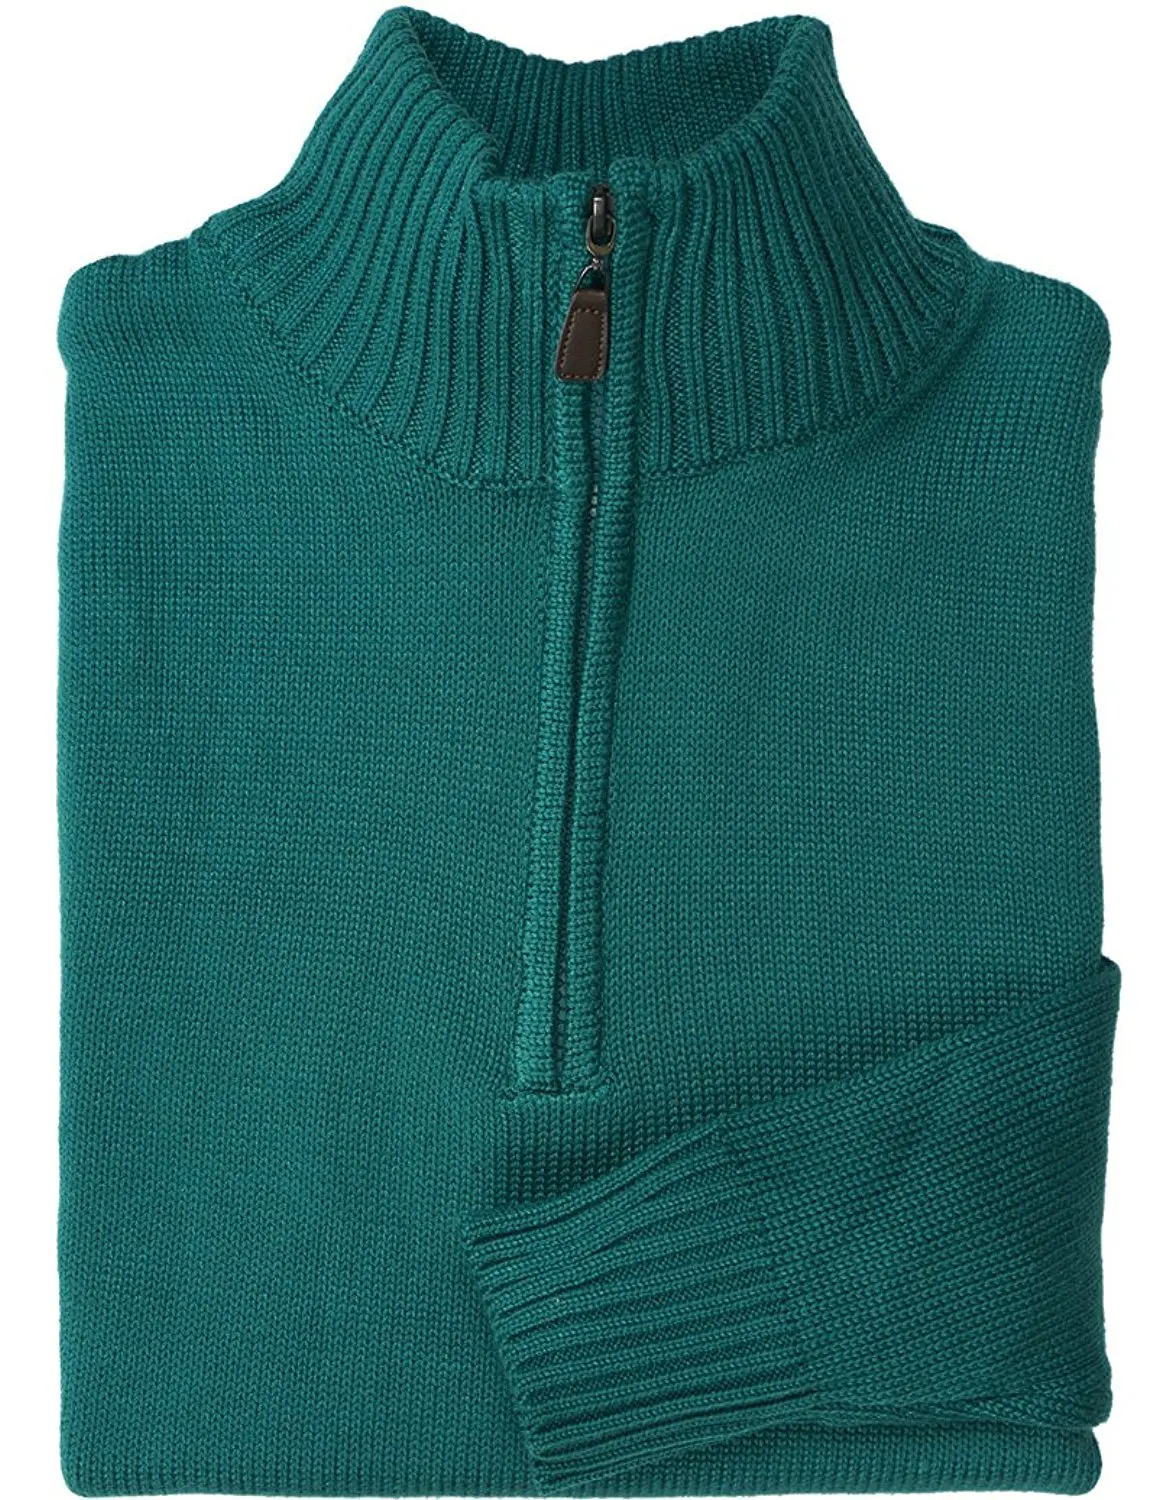 Buy Mens Half-Zip Pullover Sweater - 100% Cashmere - Citizen Cashmere